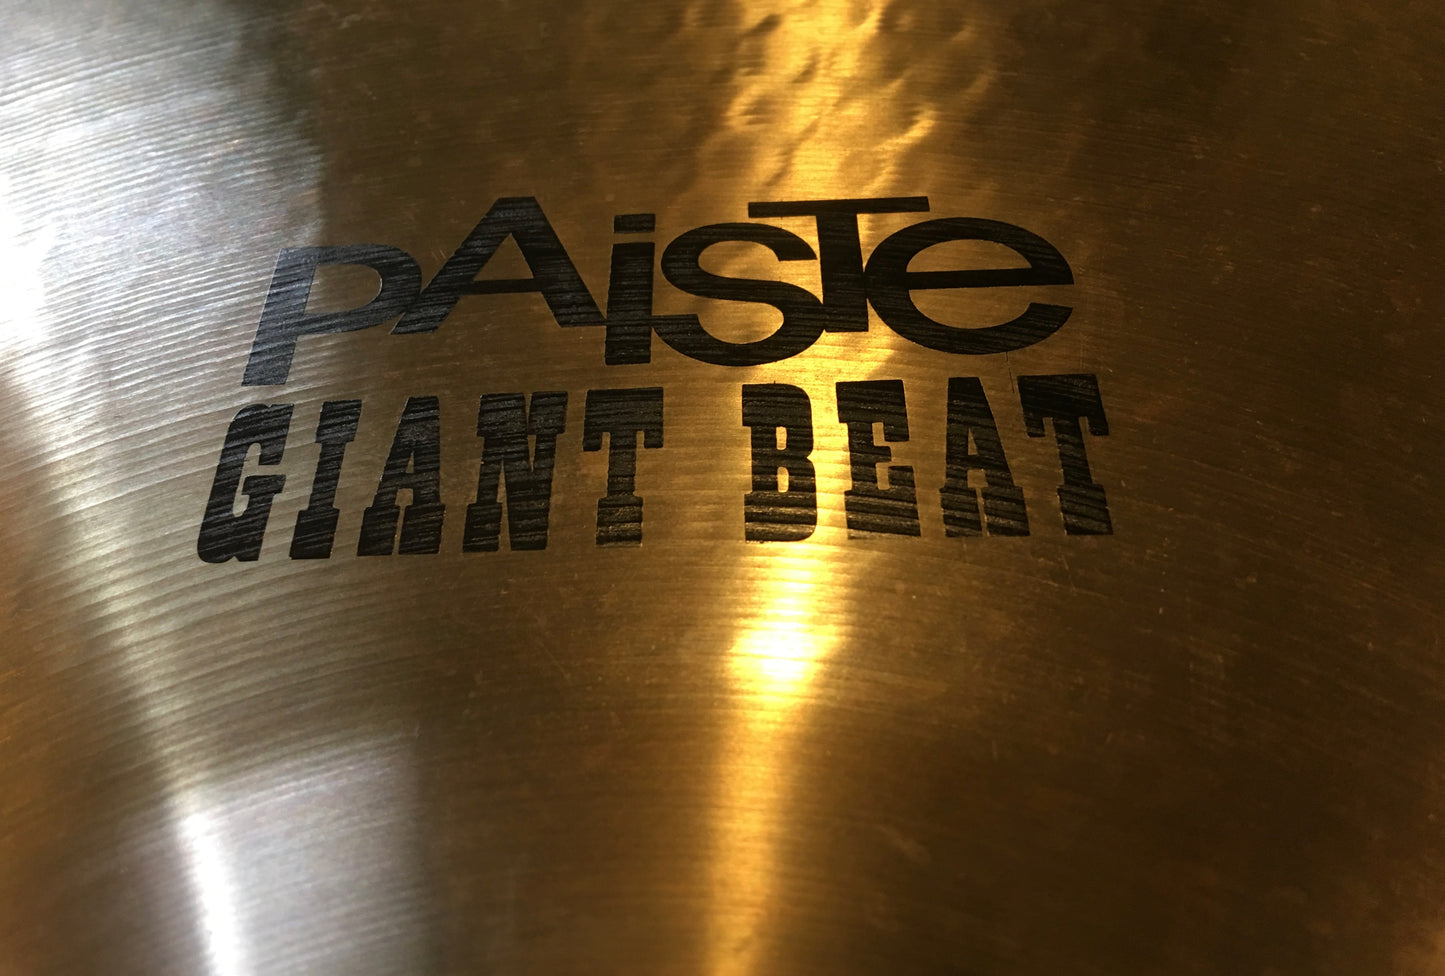 24" Paiste Giant Beat Crash / Ride Multi-Functional Cymbal 2928g